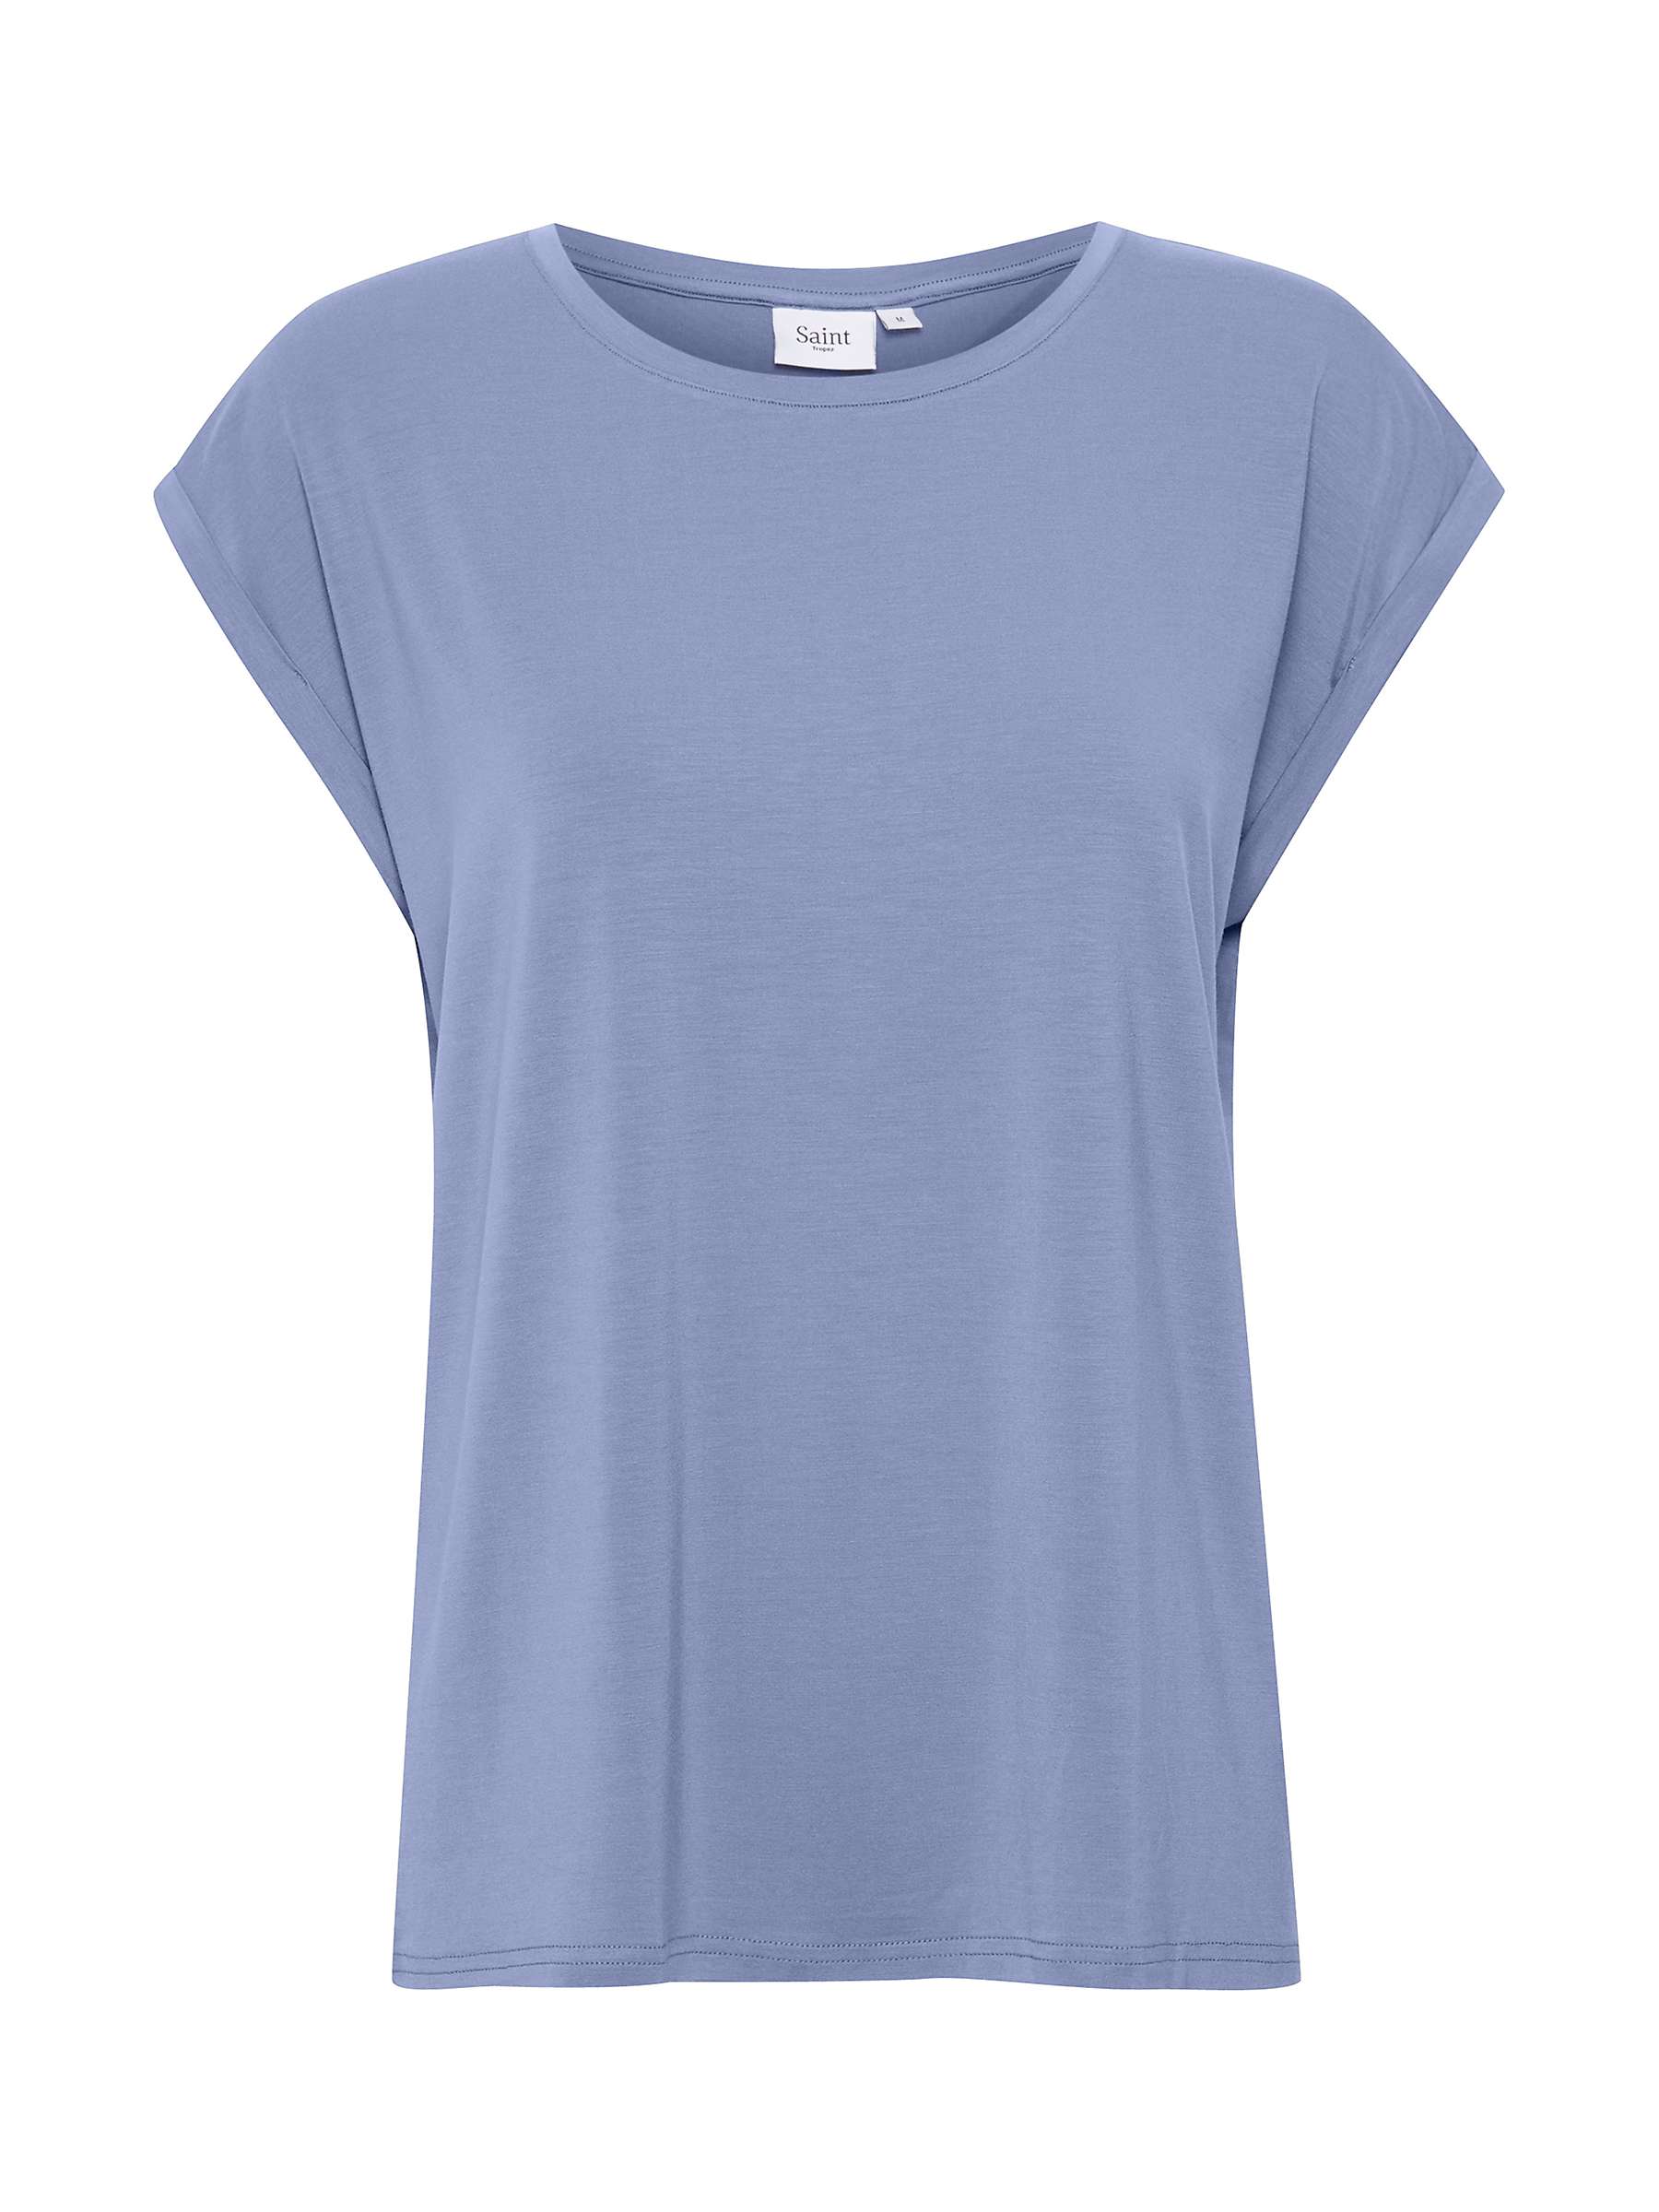 Saint Tropez Adelia T-Shirt, Colony Blue at John Lewis & Partners